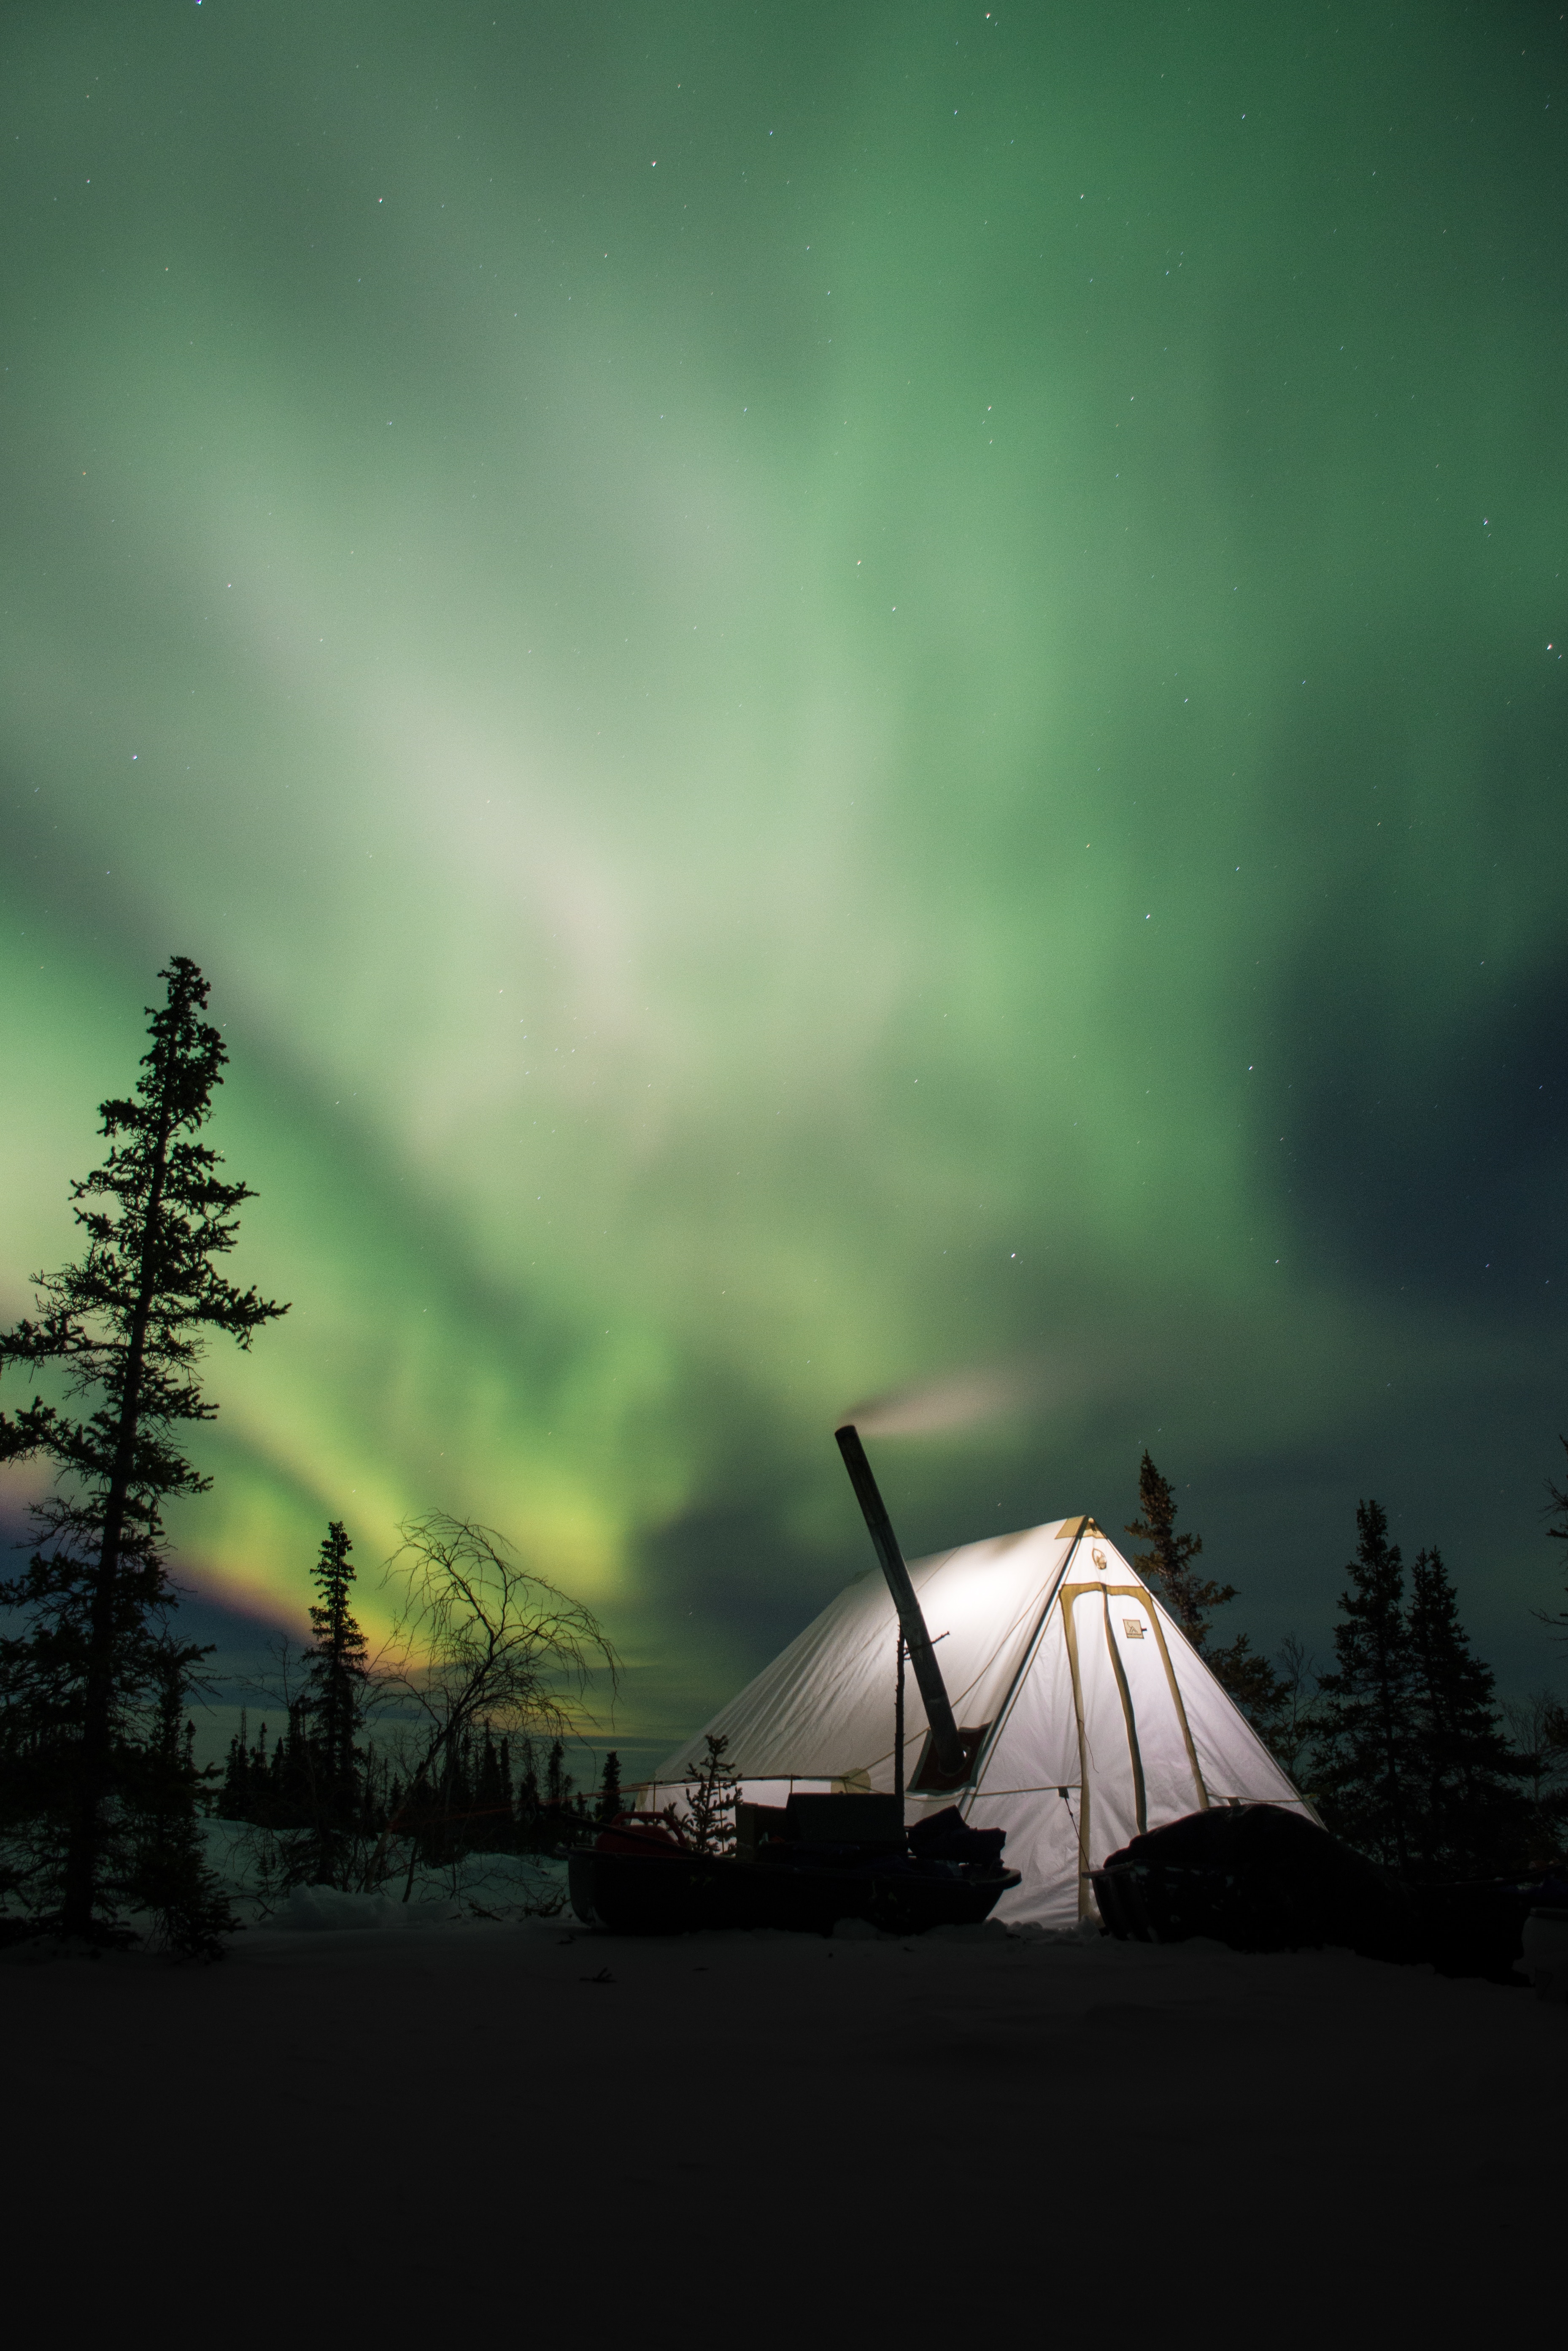 aurora borealis, aurora, tent, nature, night, northern lights, camping, campsite